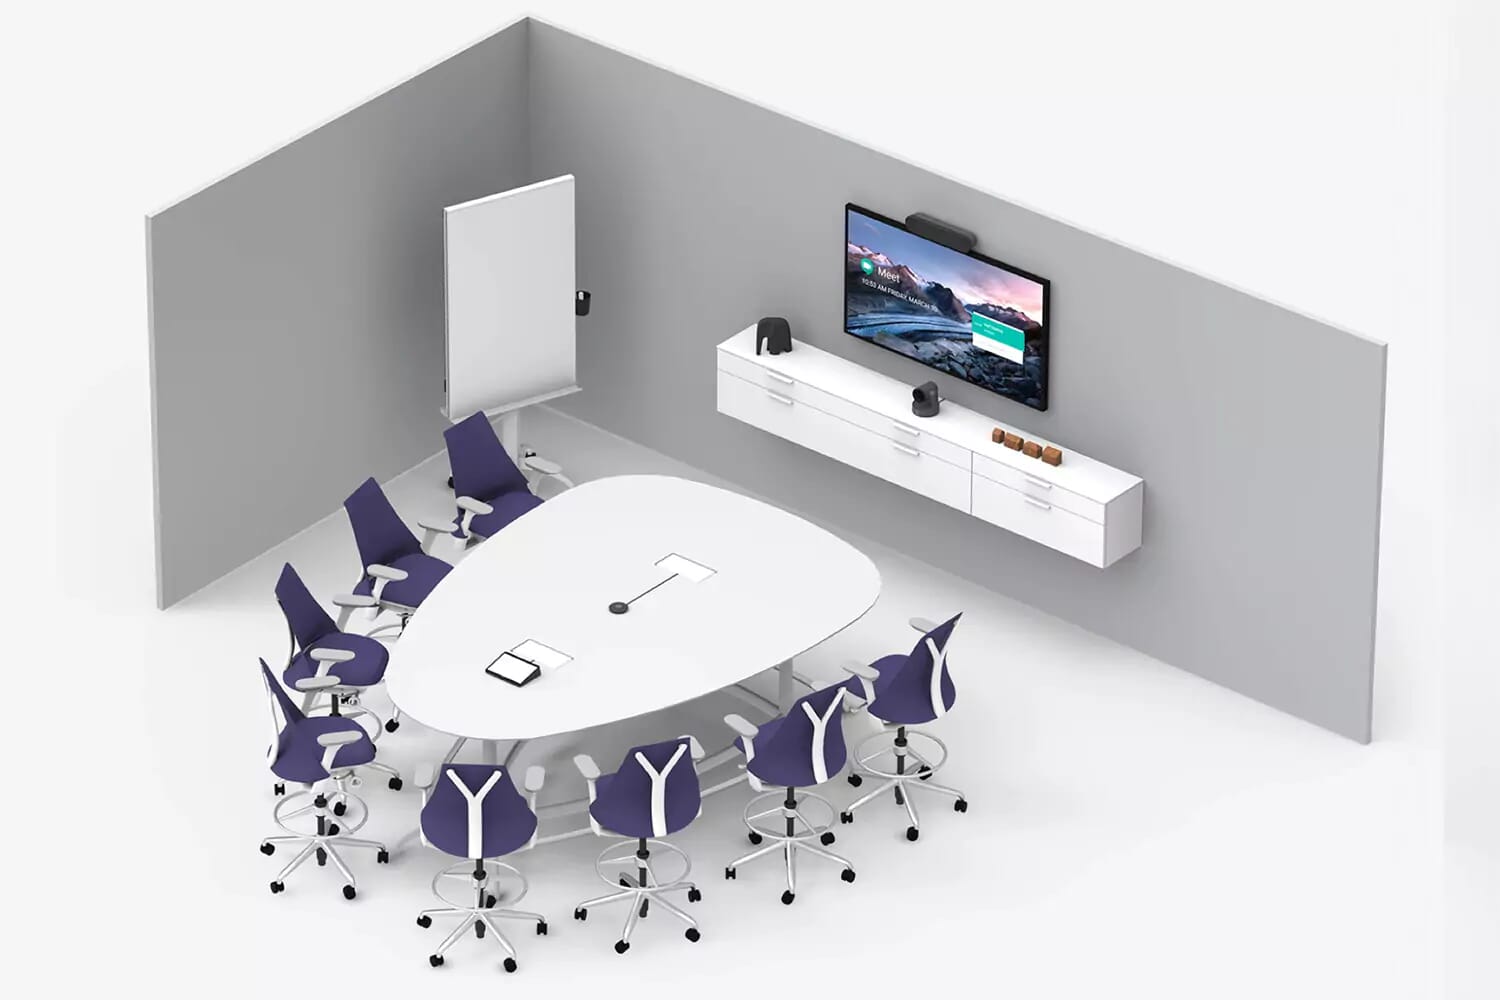 Medium meeting room solutions